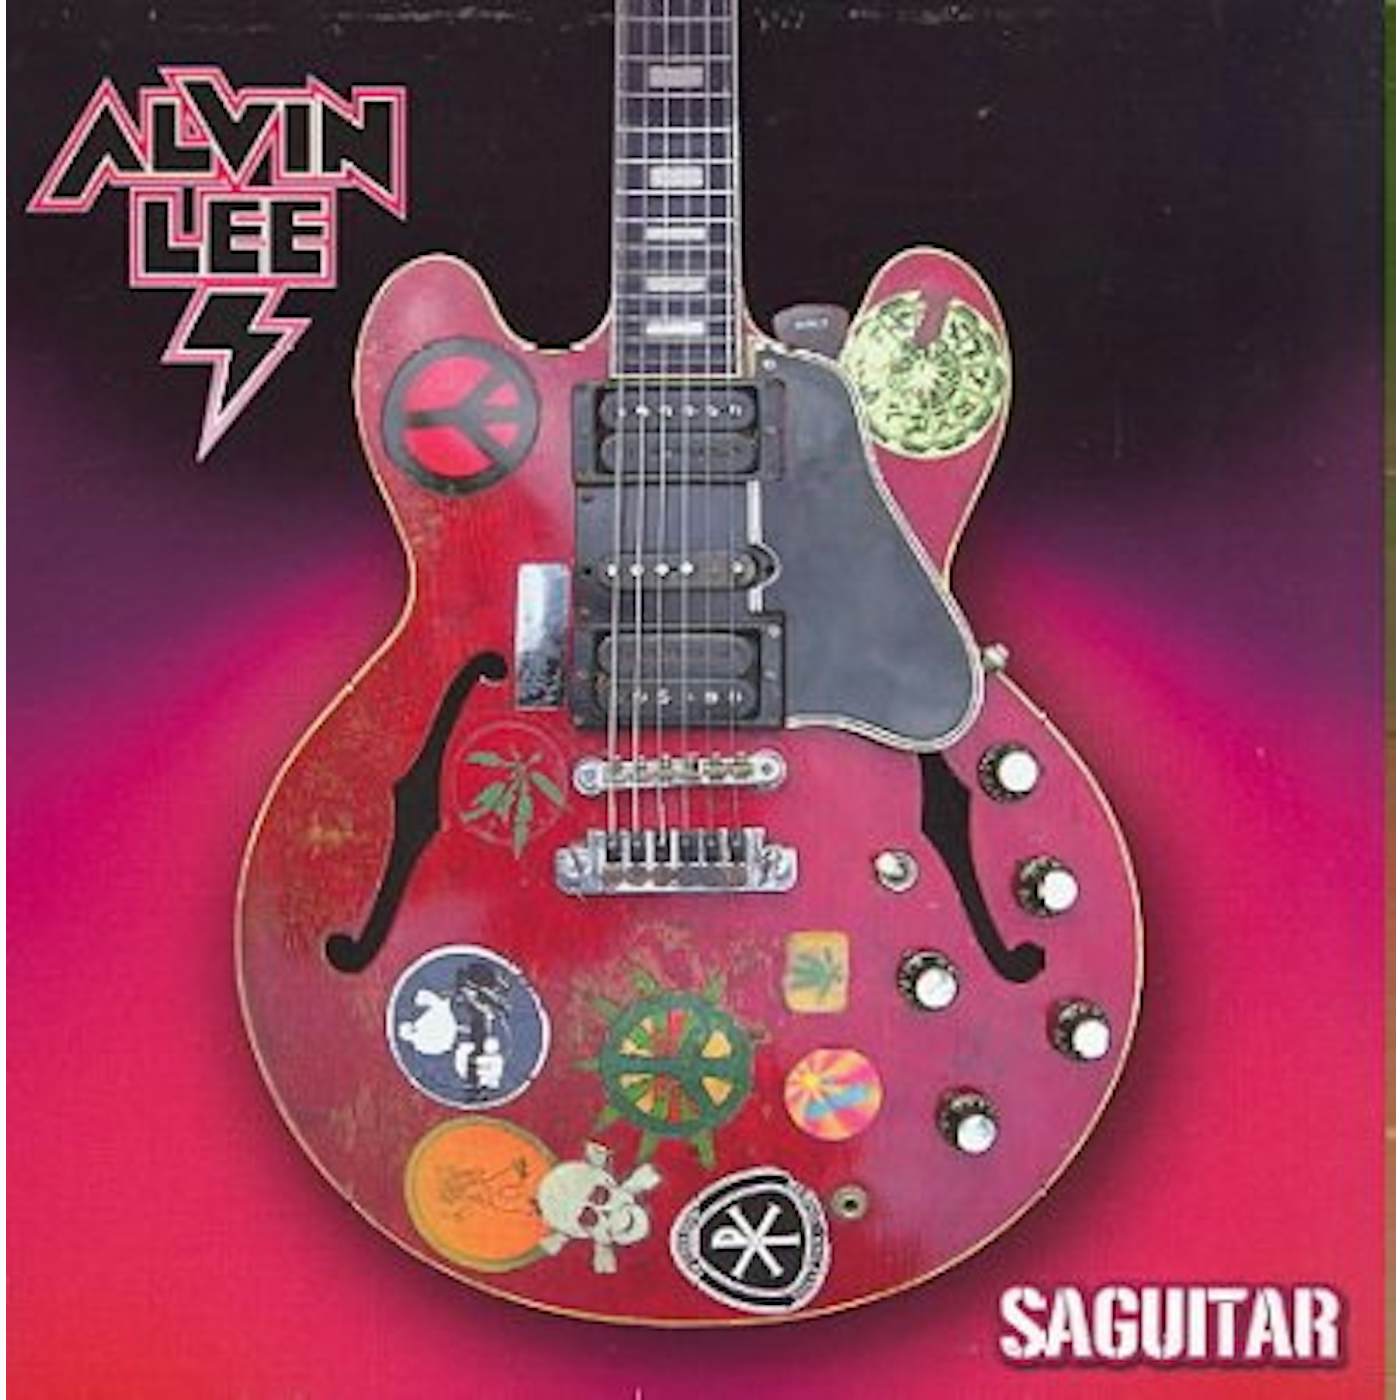 Alvin Lee SAGUITAR CD